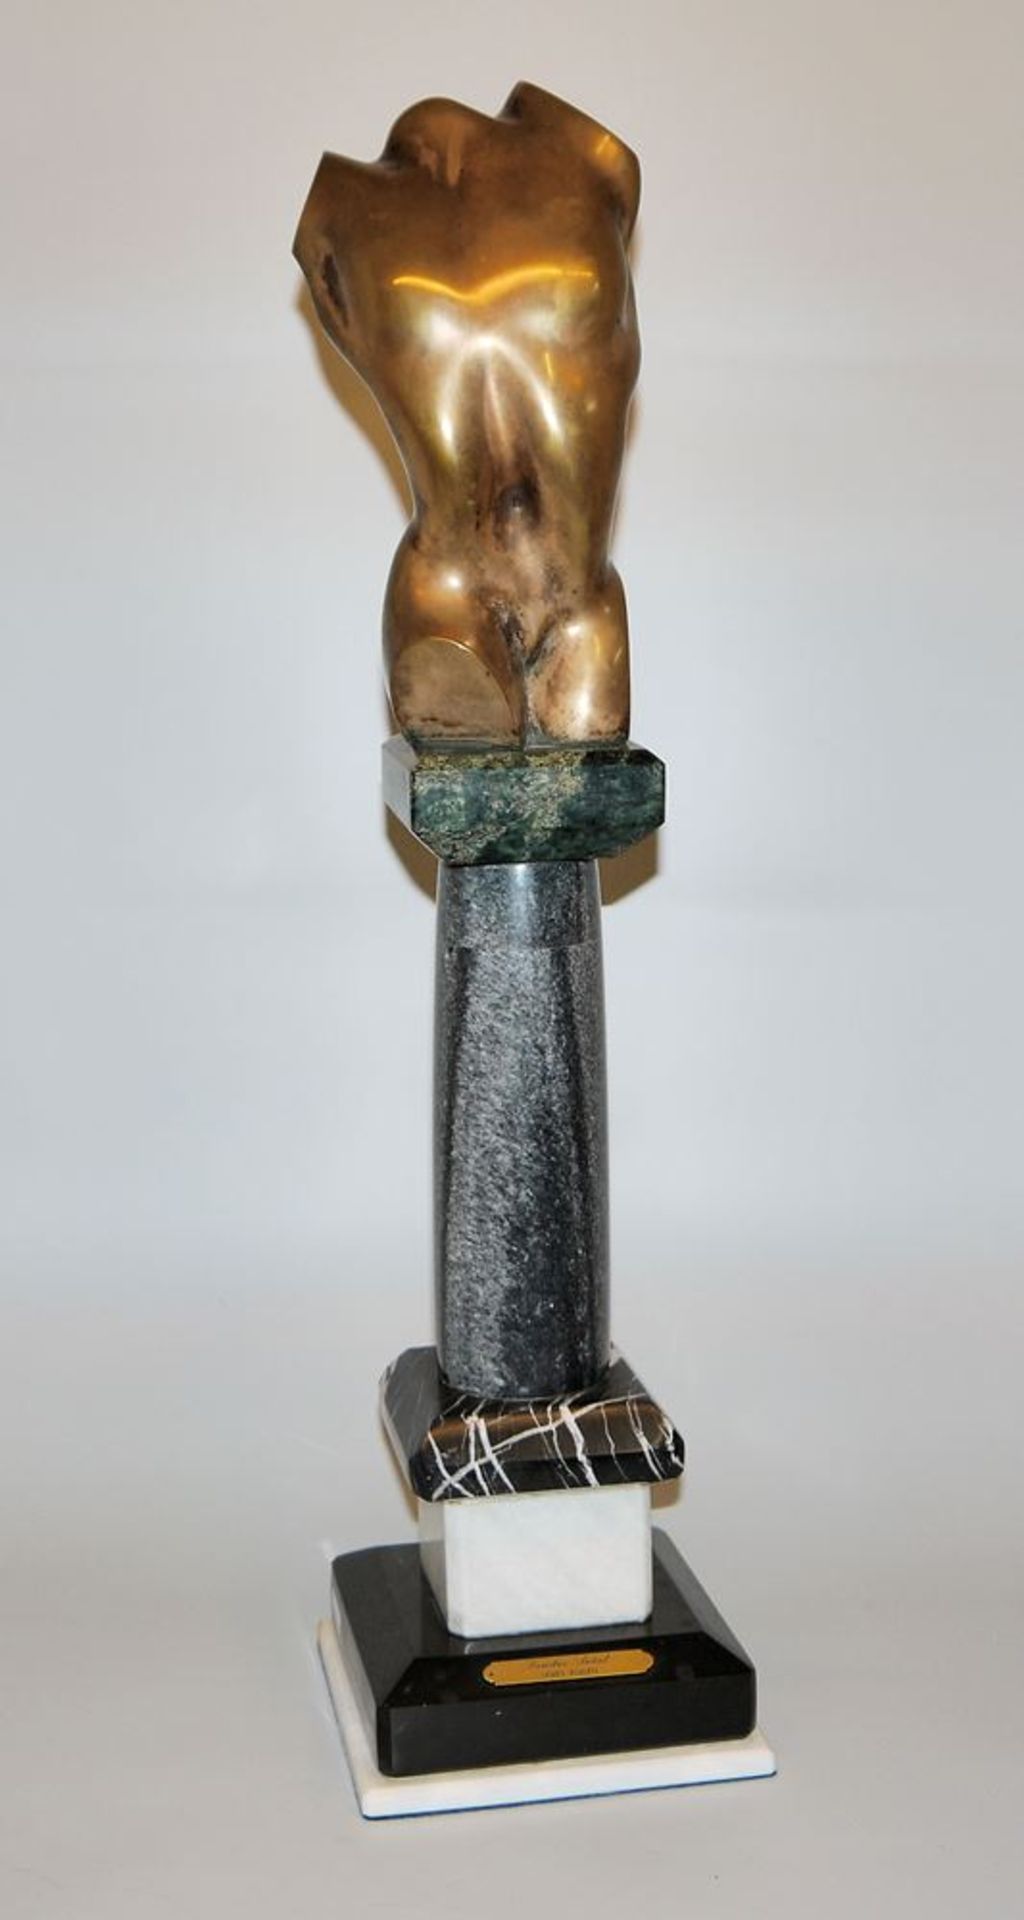 Sandor Antal, "Férfi Torzò" - "Male Torso", signed bronze sculpture from (19)95